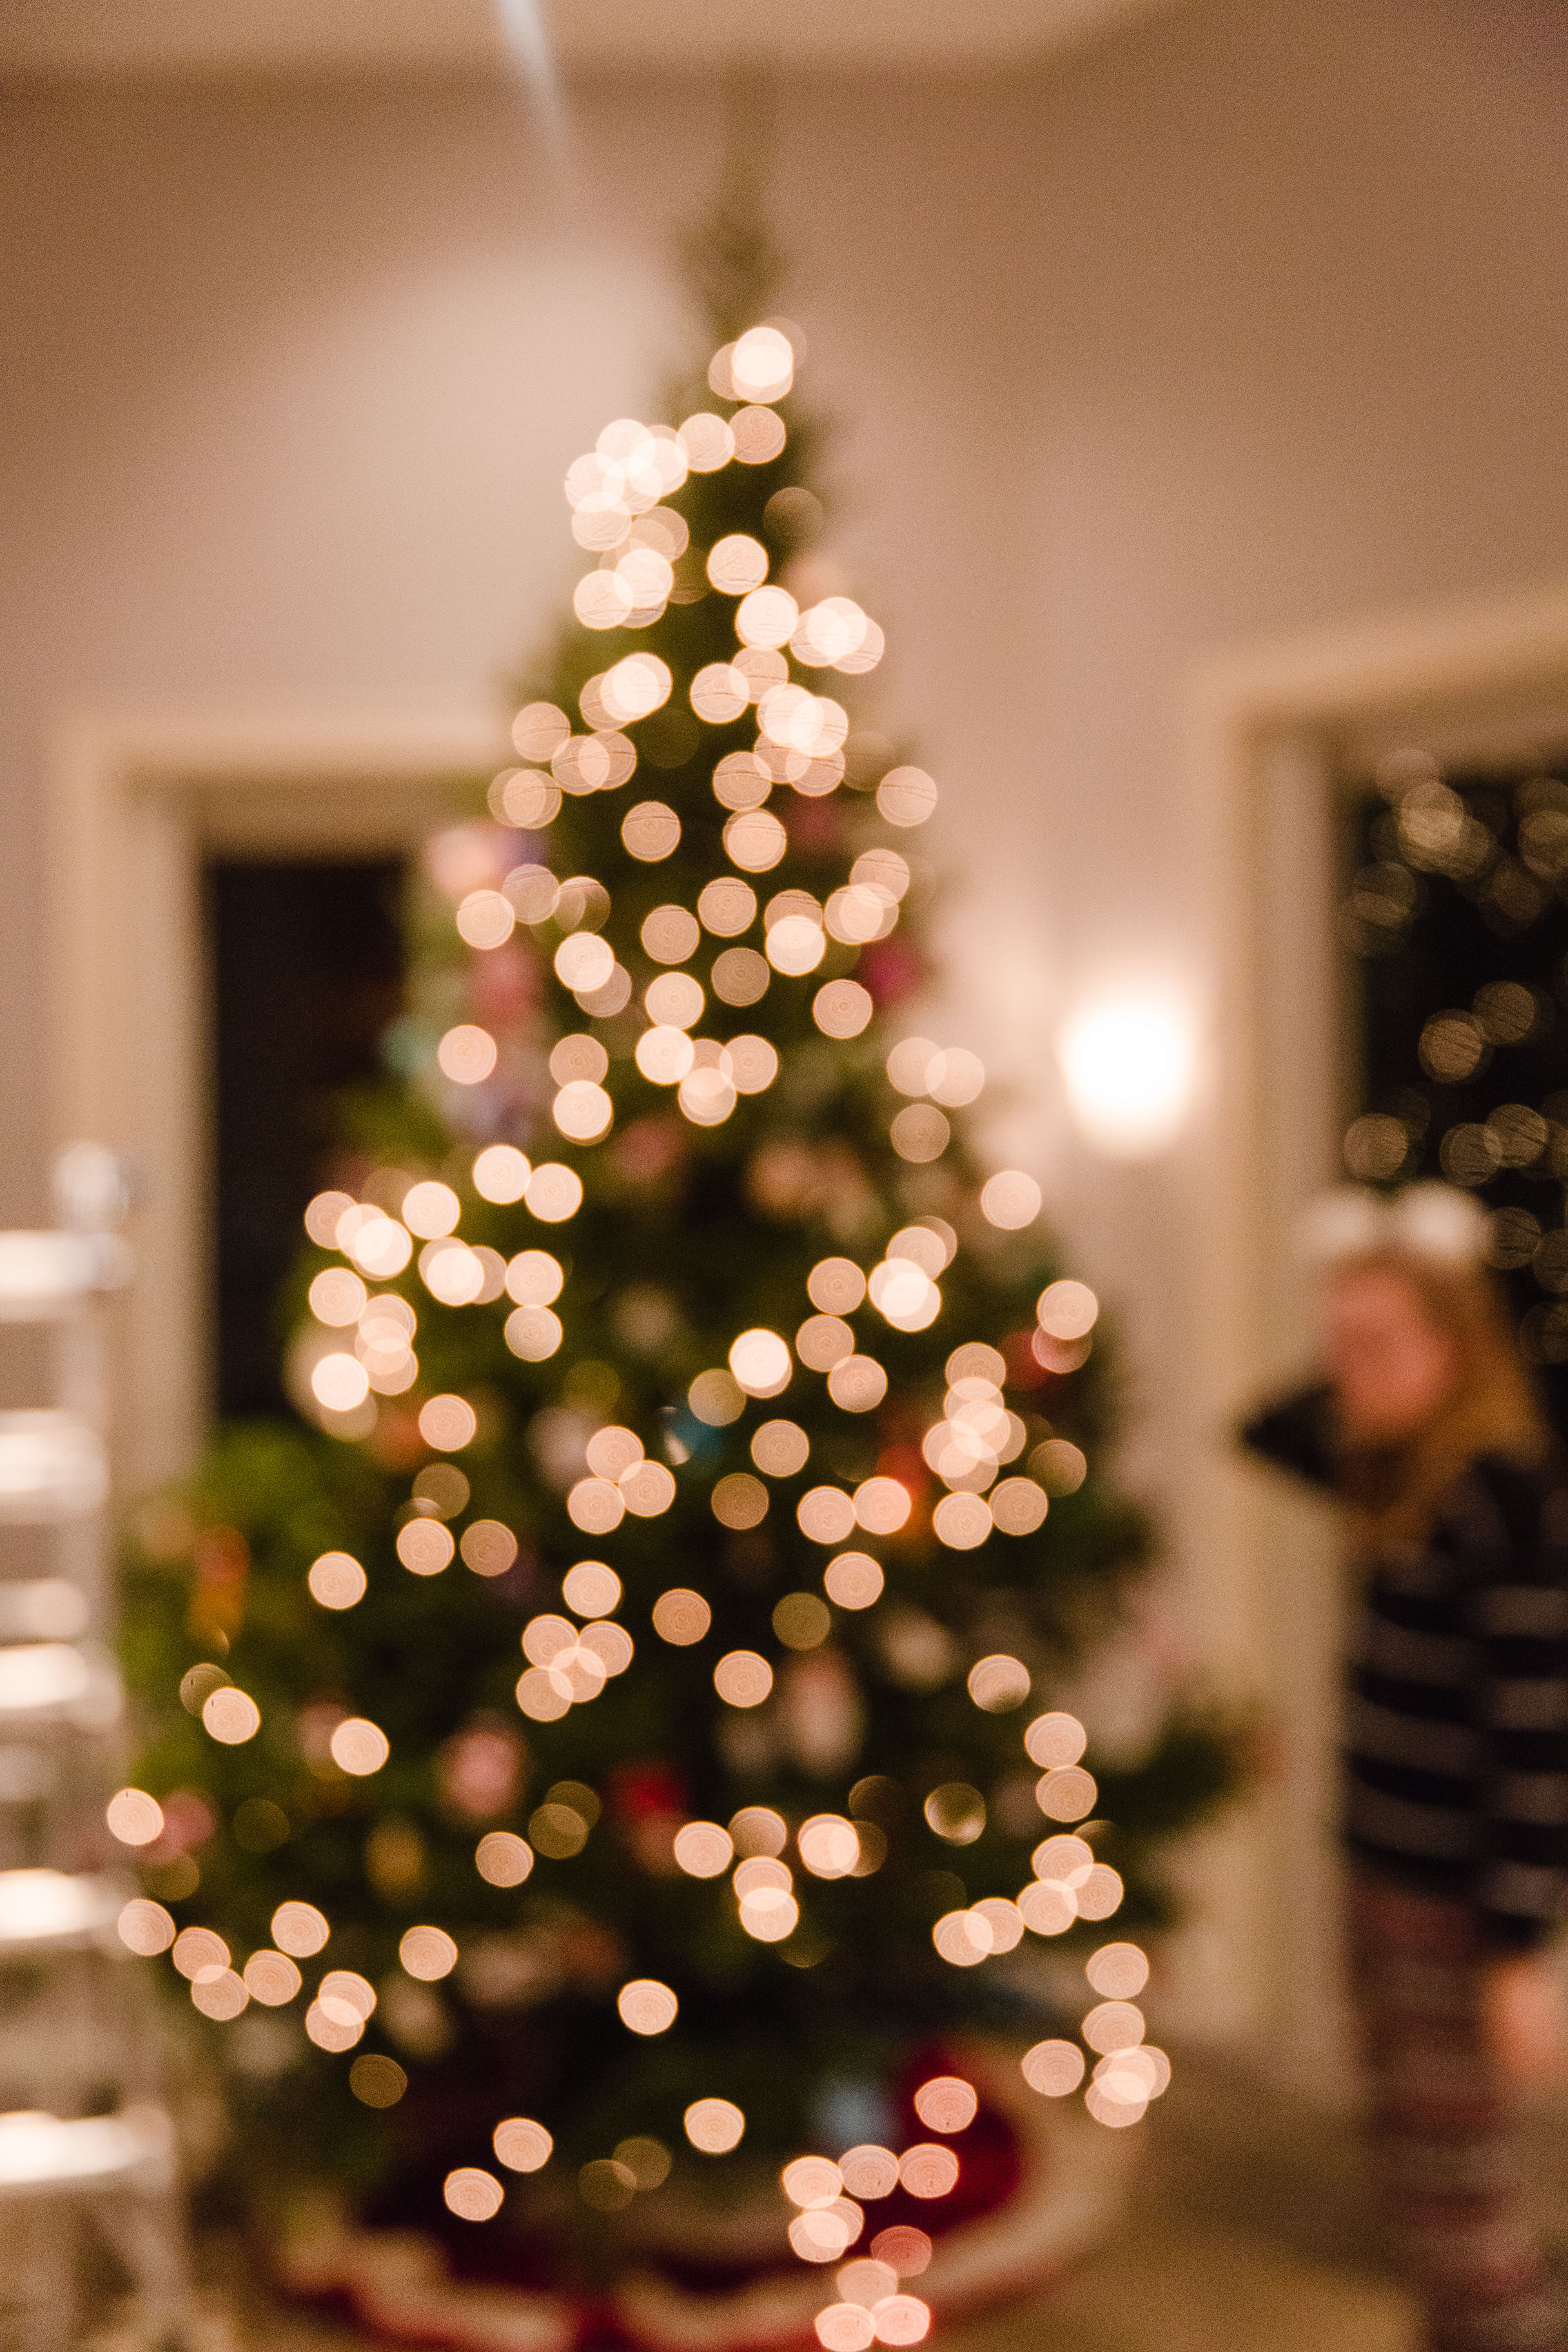 blurry lights on Christmas tree